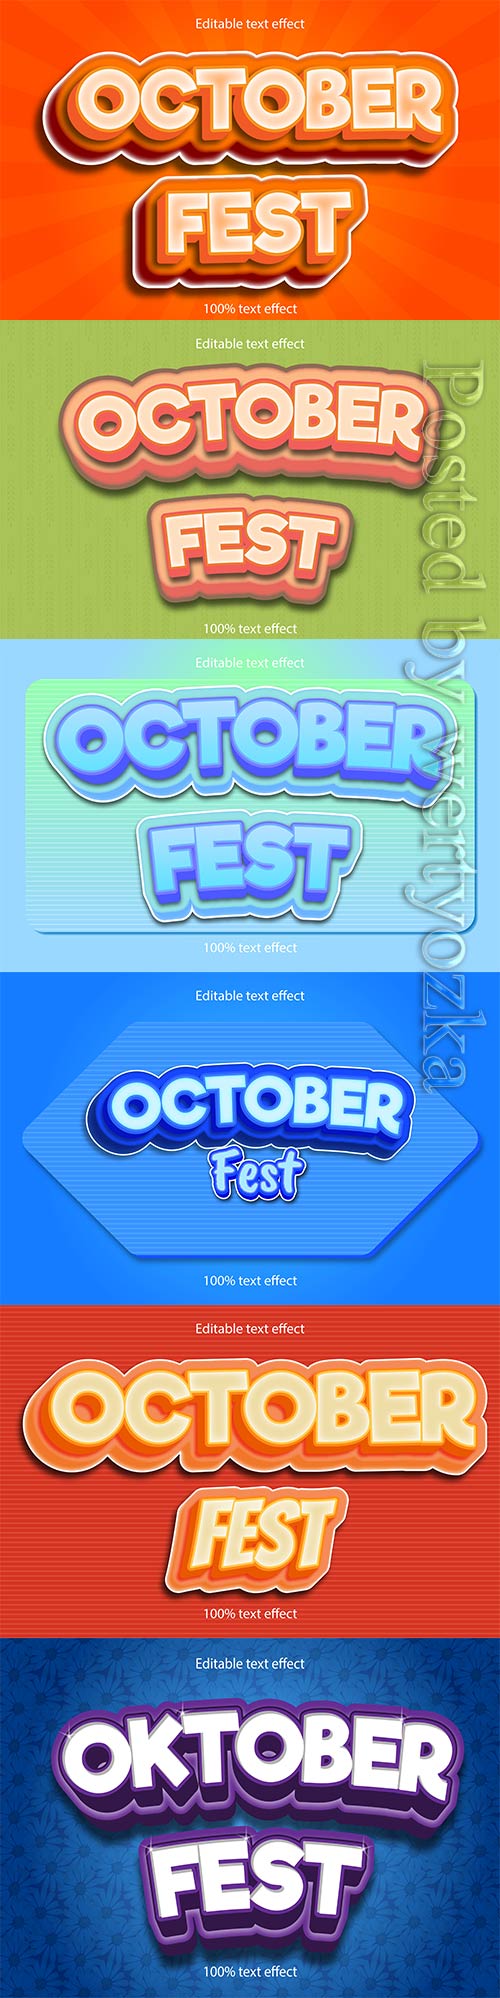 October fest editable text effect vol 5